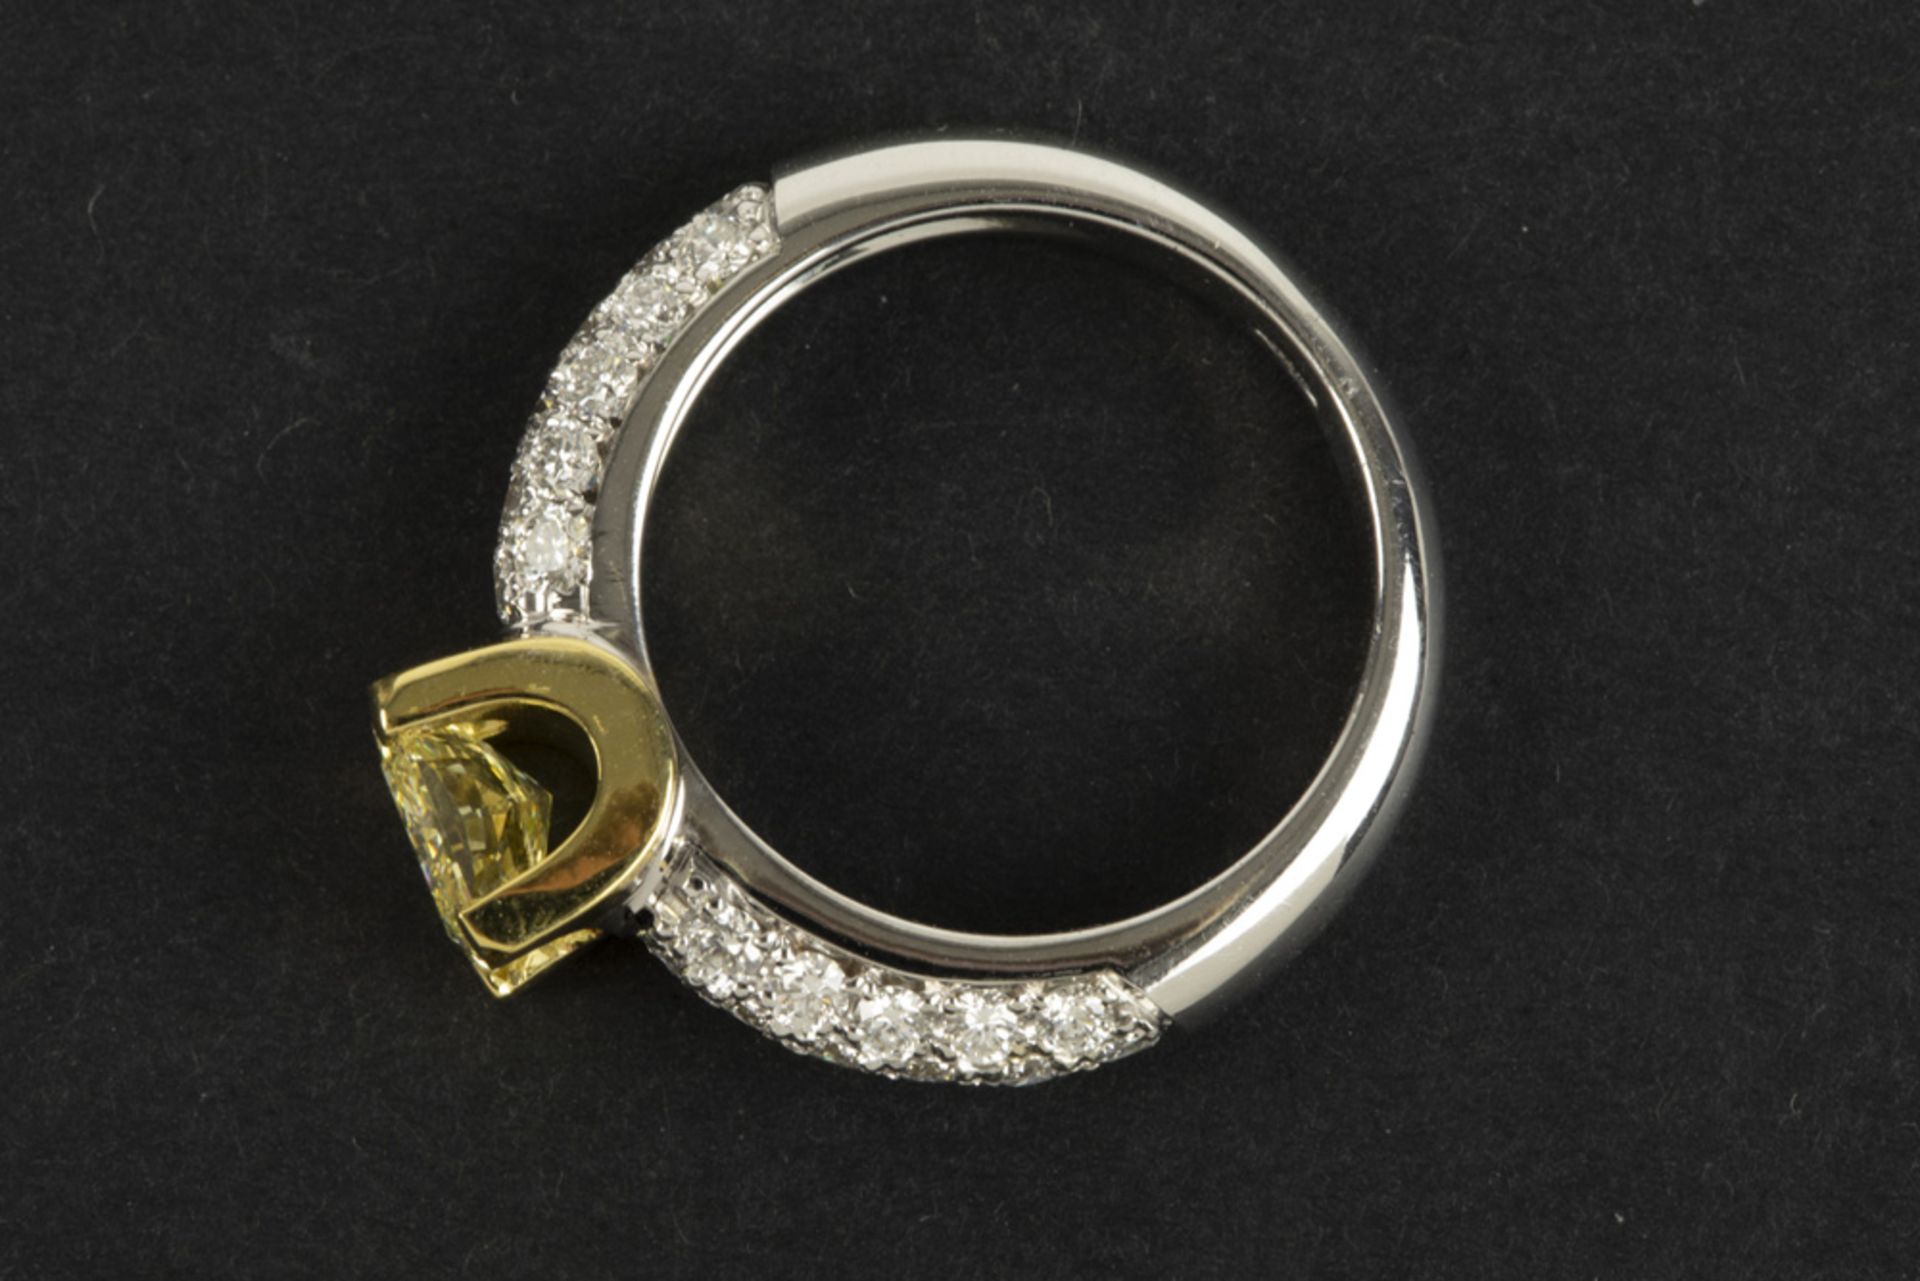 high quality fancy yellow princess' cut diamond of 1,21 carat) set in yellow gold (18 carat) mounted - Image 2 of 3